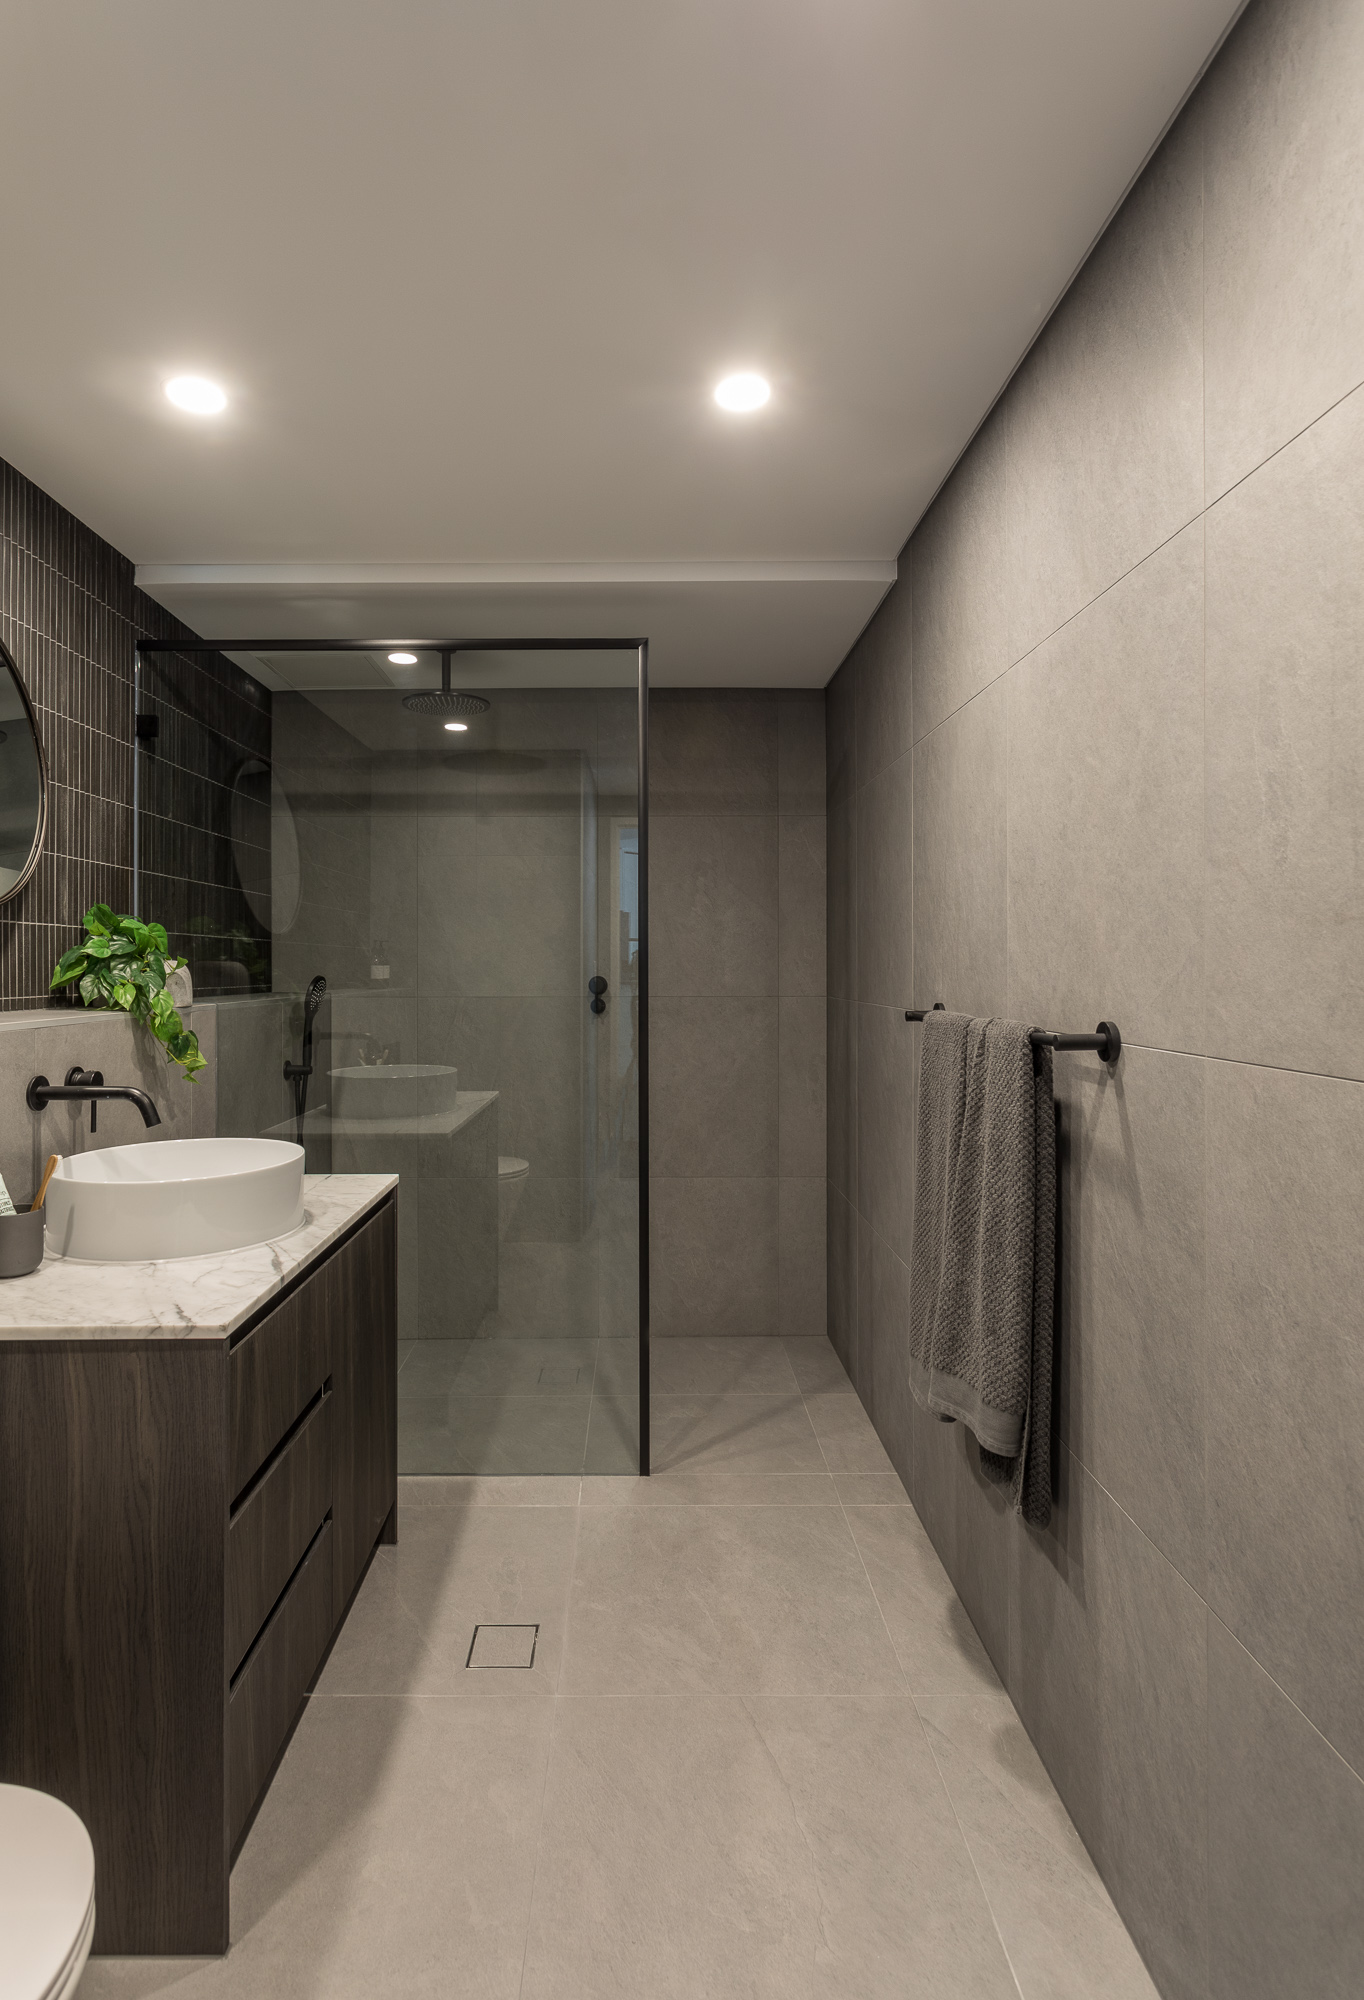 Bathroom interior design 2